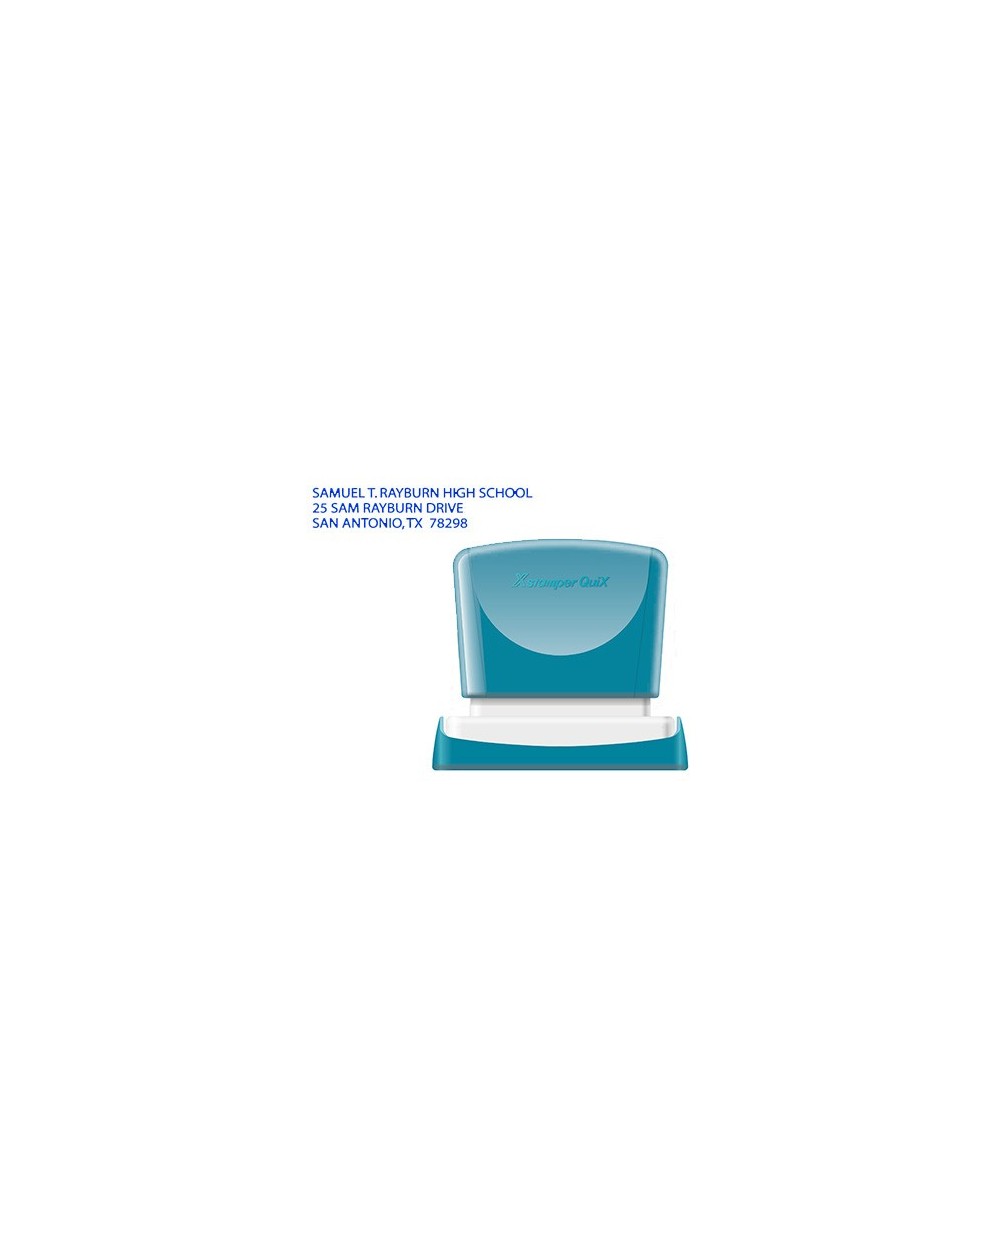 Sello x stamper quix personalizable color azul medidas 14x60 mm q 14